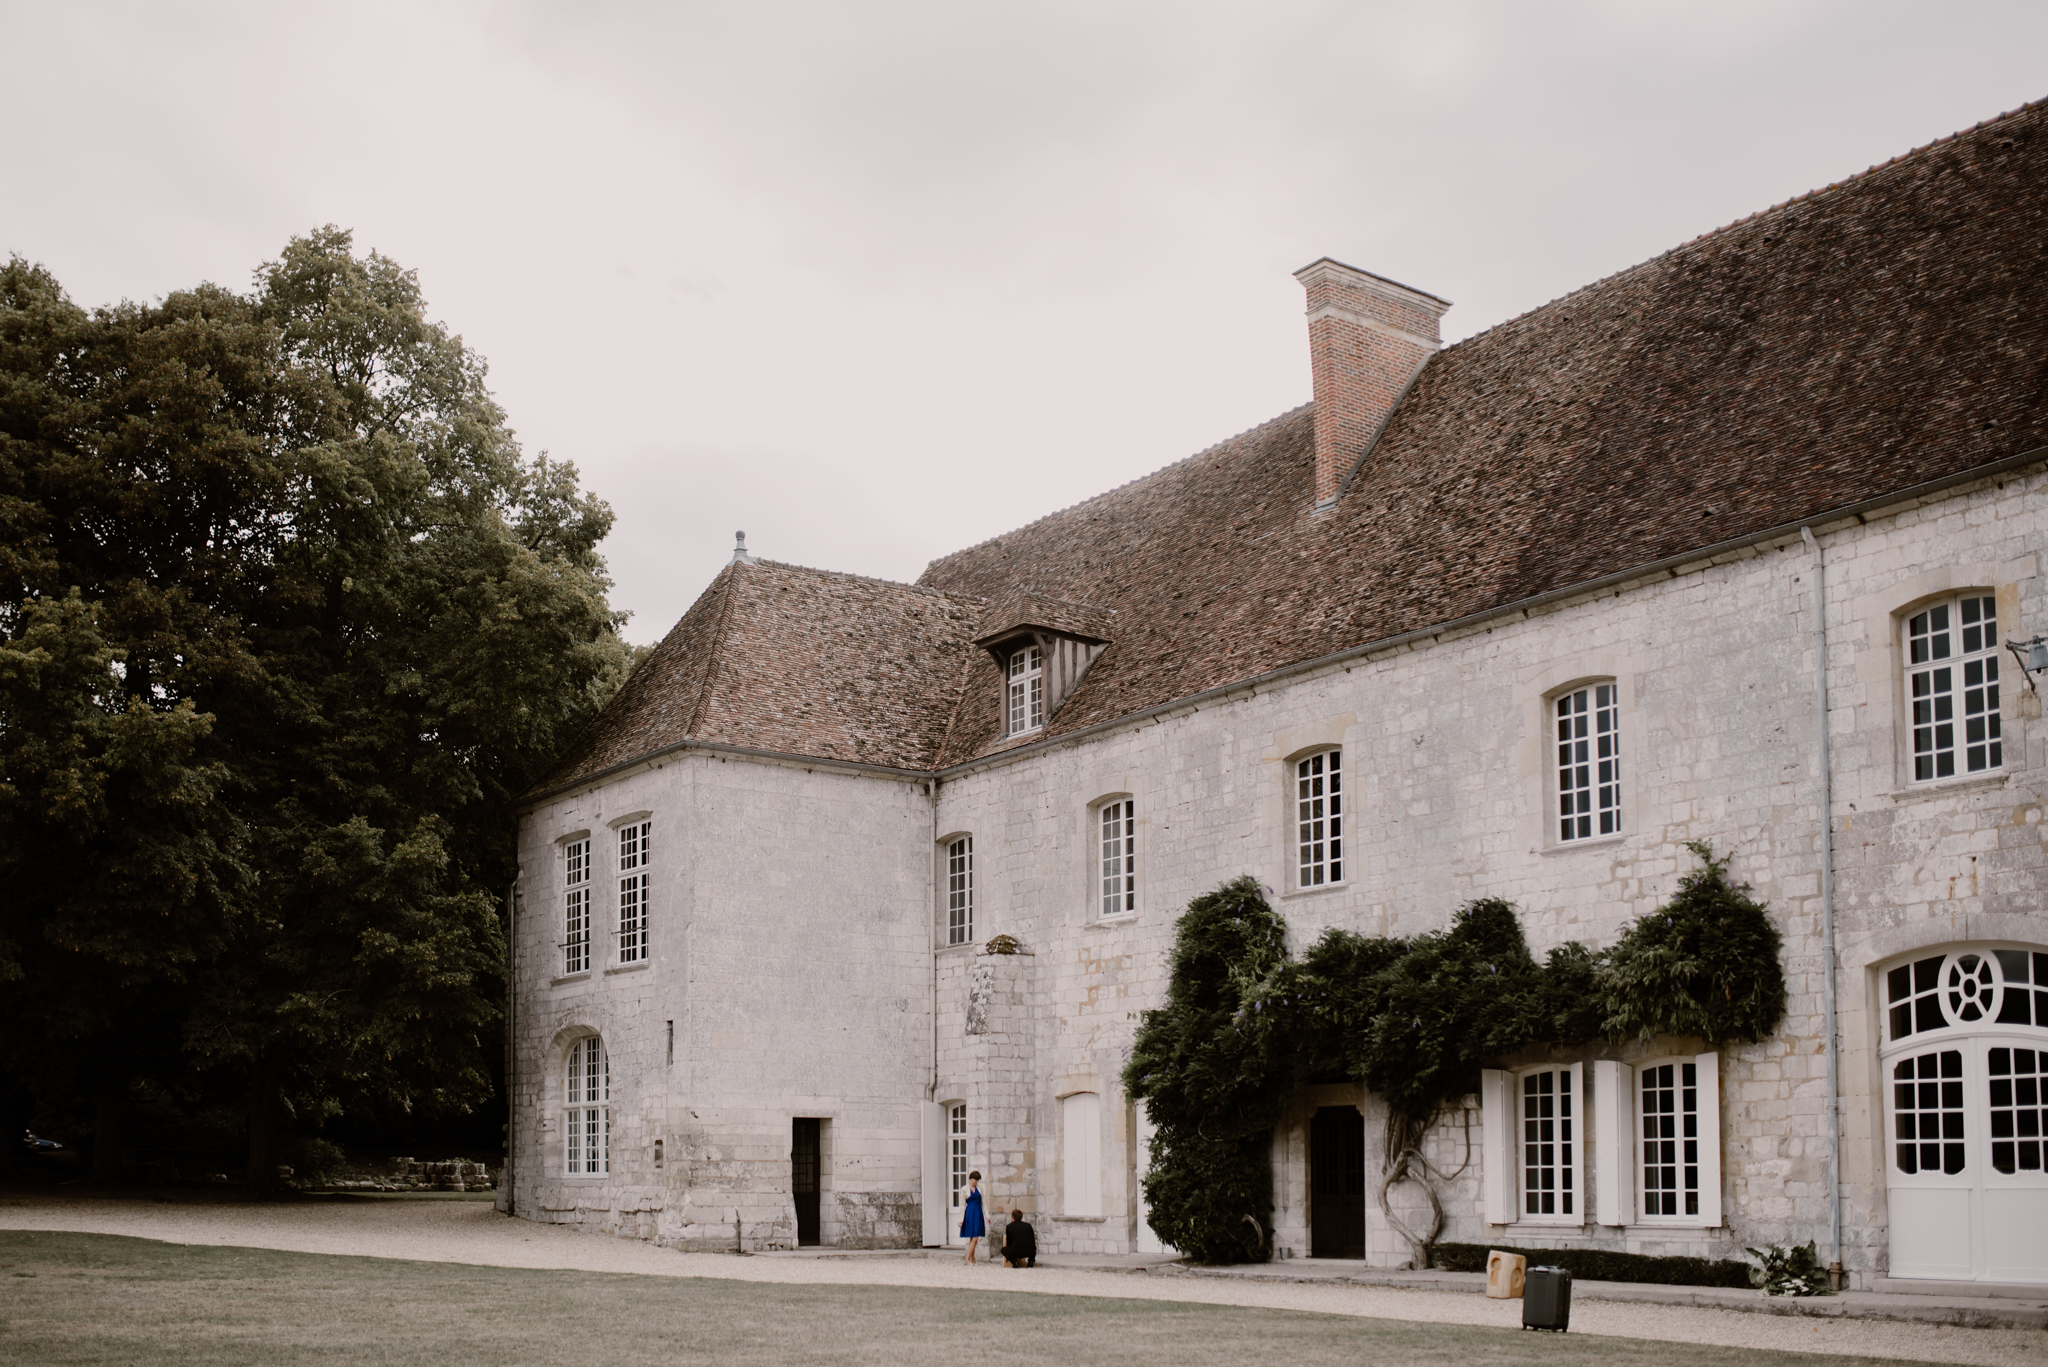 Mariage à l'Abbaye de Bonport - Marie + Geoffroy - Blog Mariage Madame C